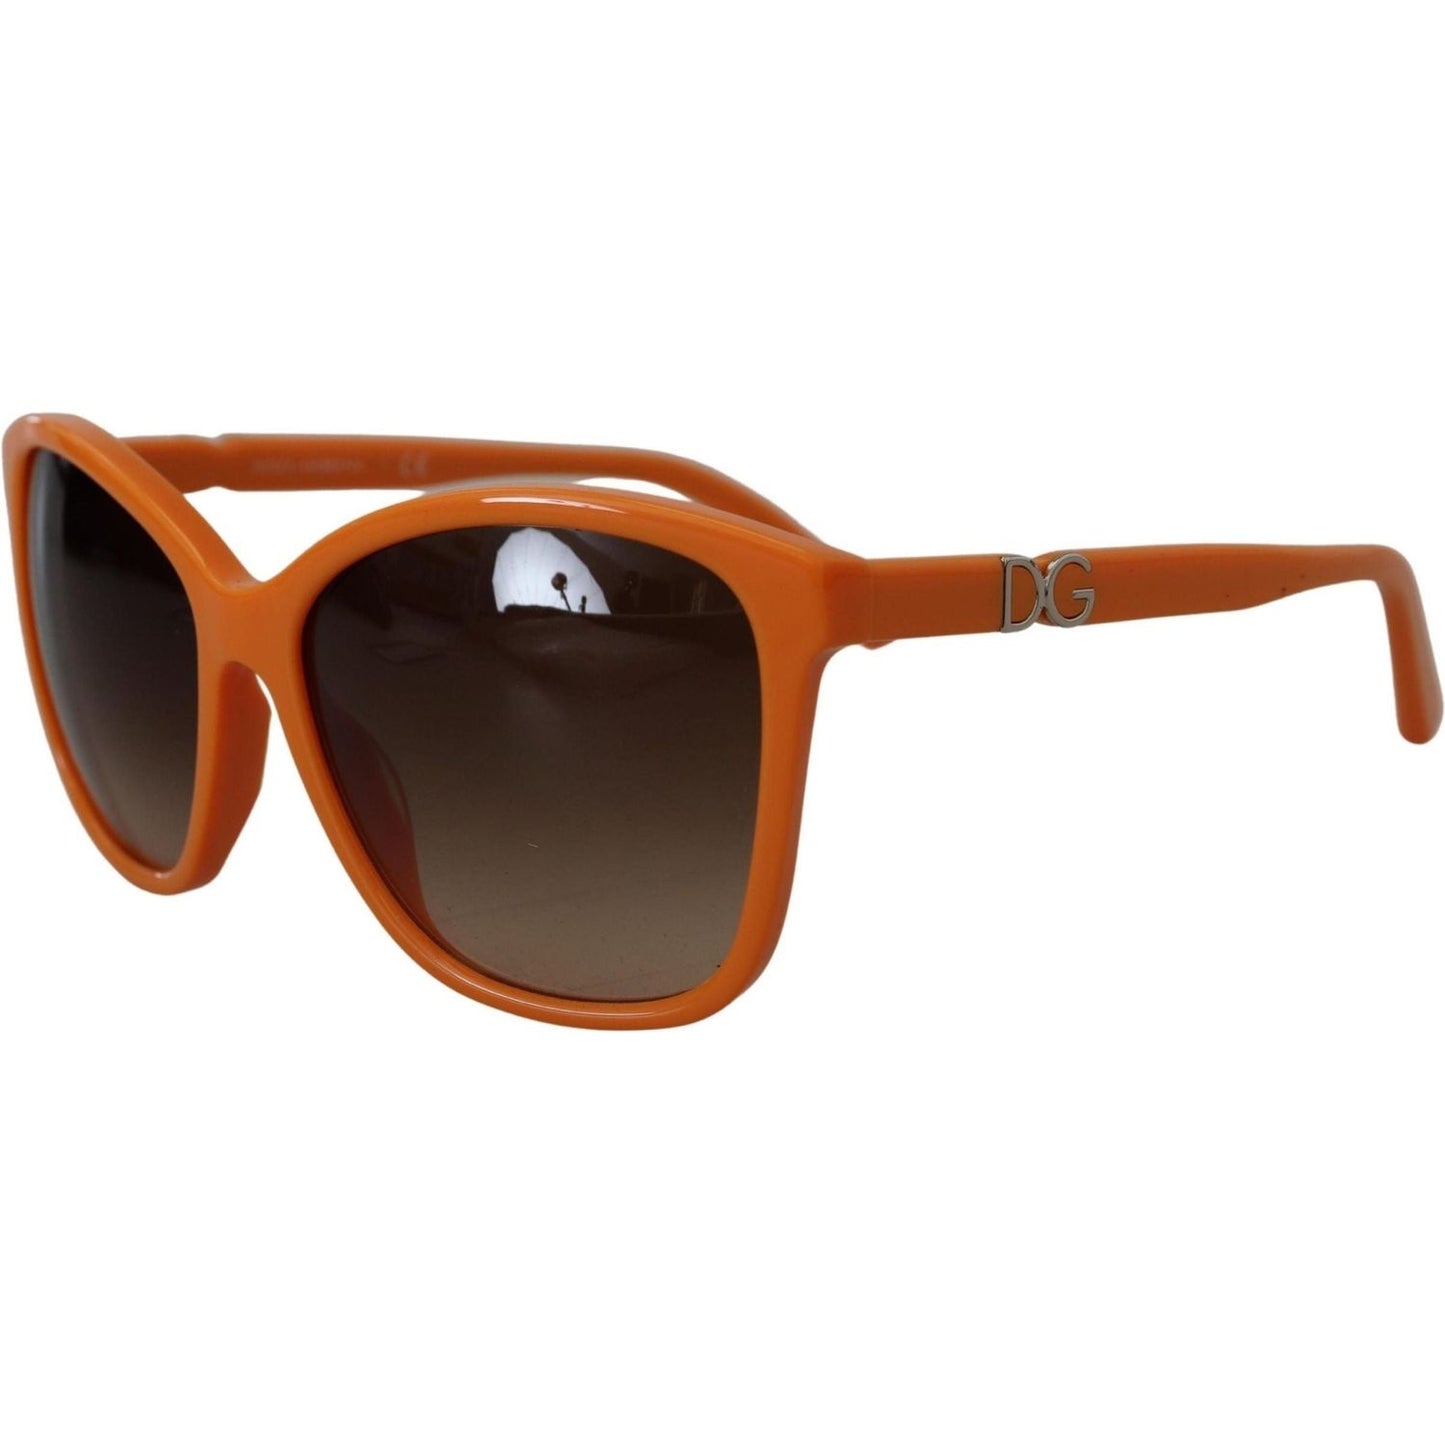 Dolce & Gabbana Chic Orange Round Sunglasses for Women orange-acetate-frame-round-shades-dg4170pm-sunglasses